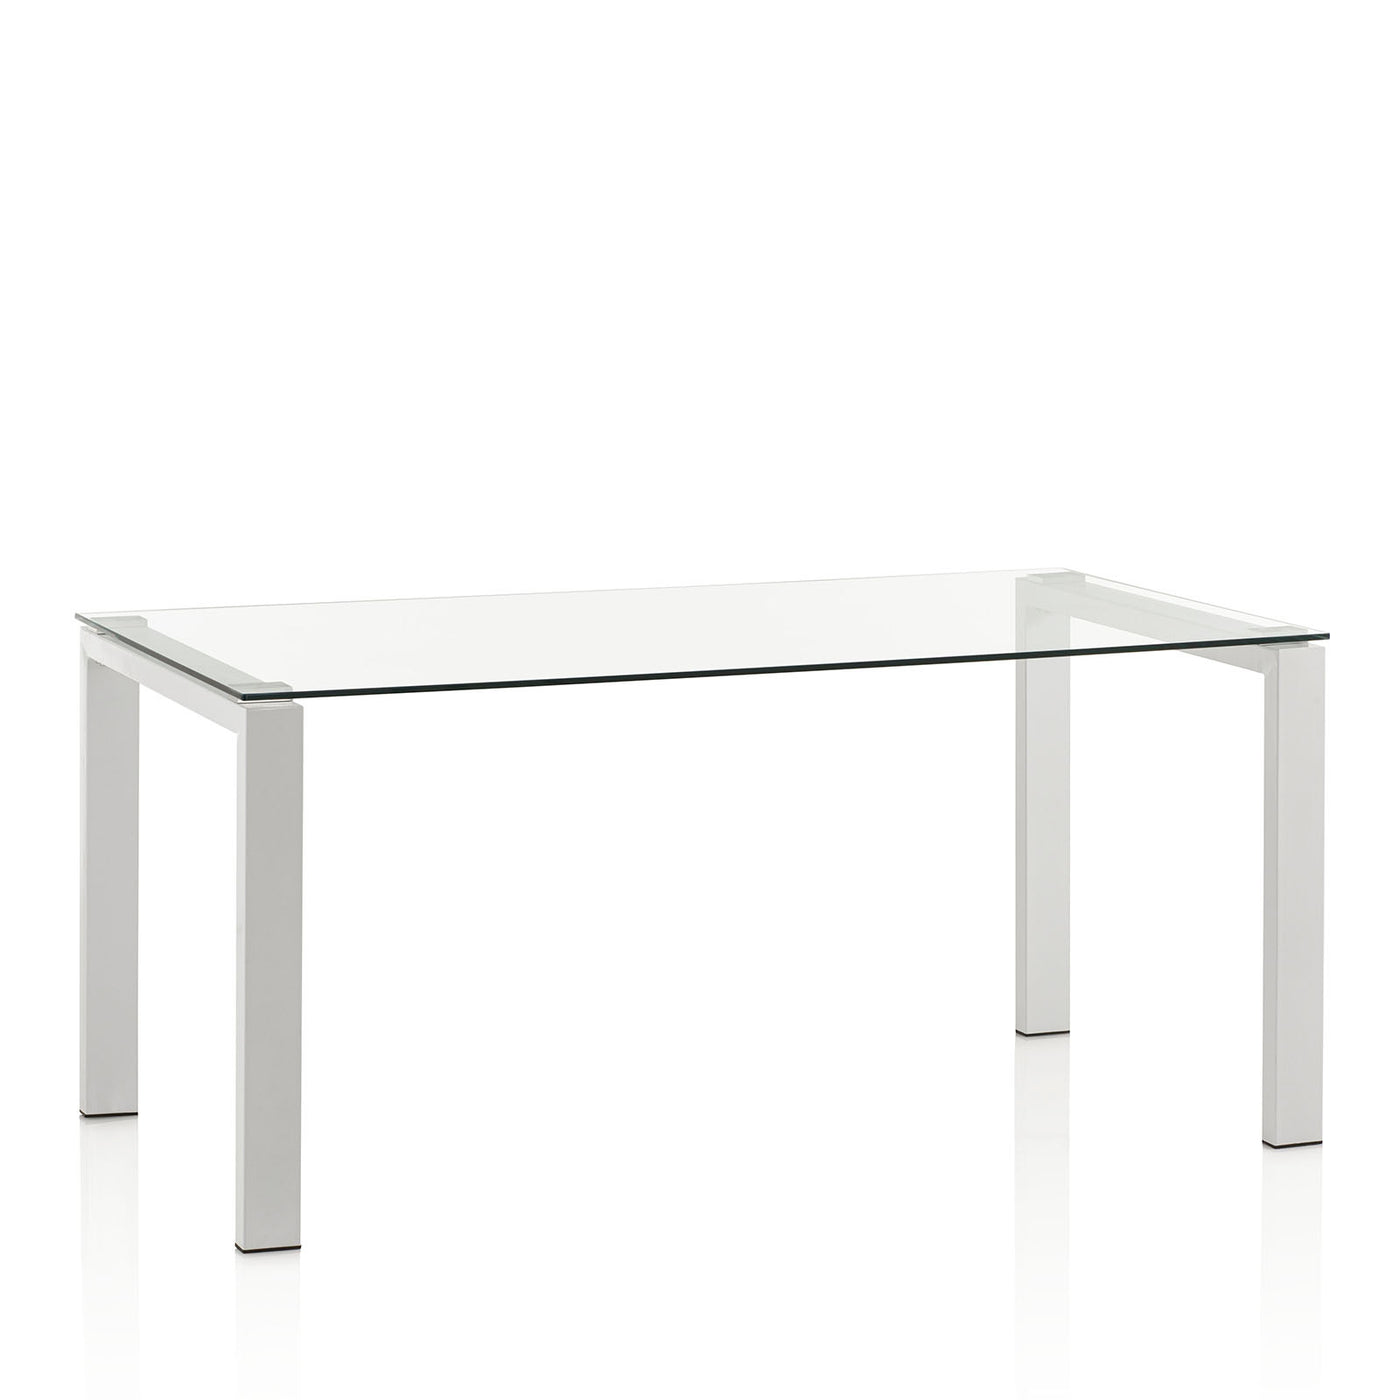 ICE table/desk